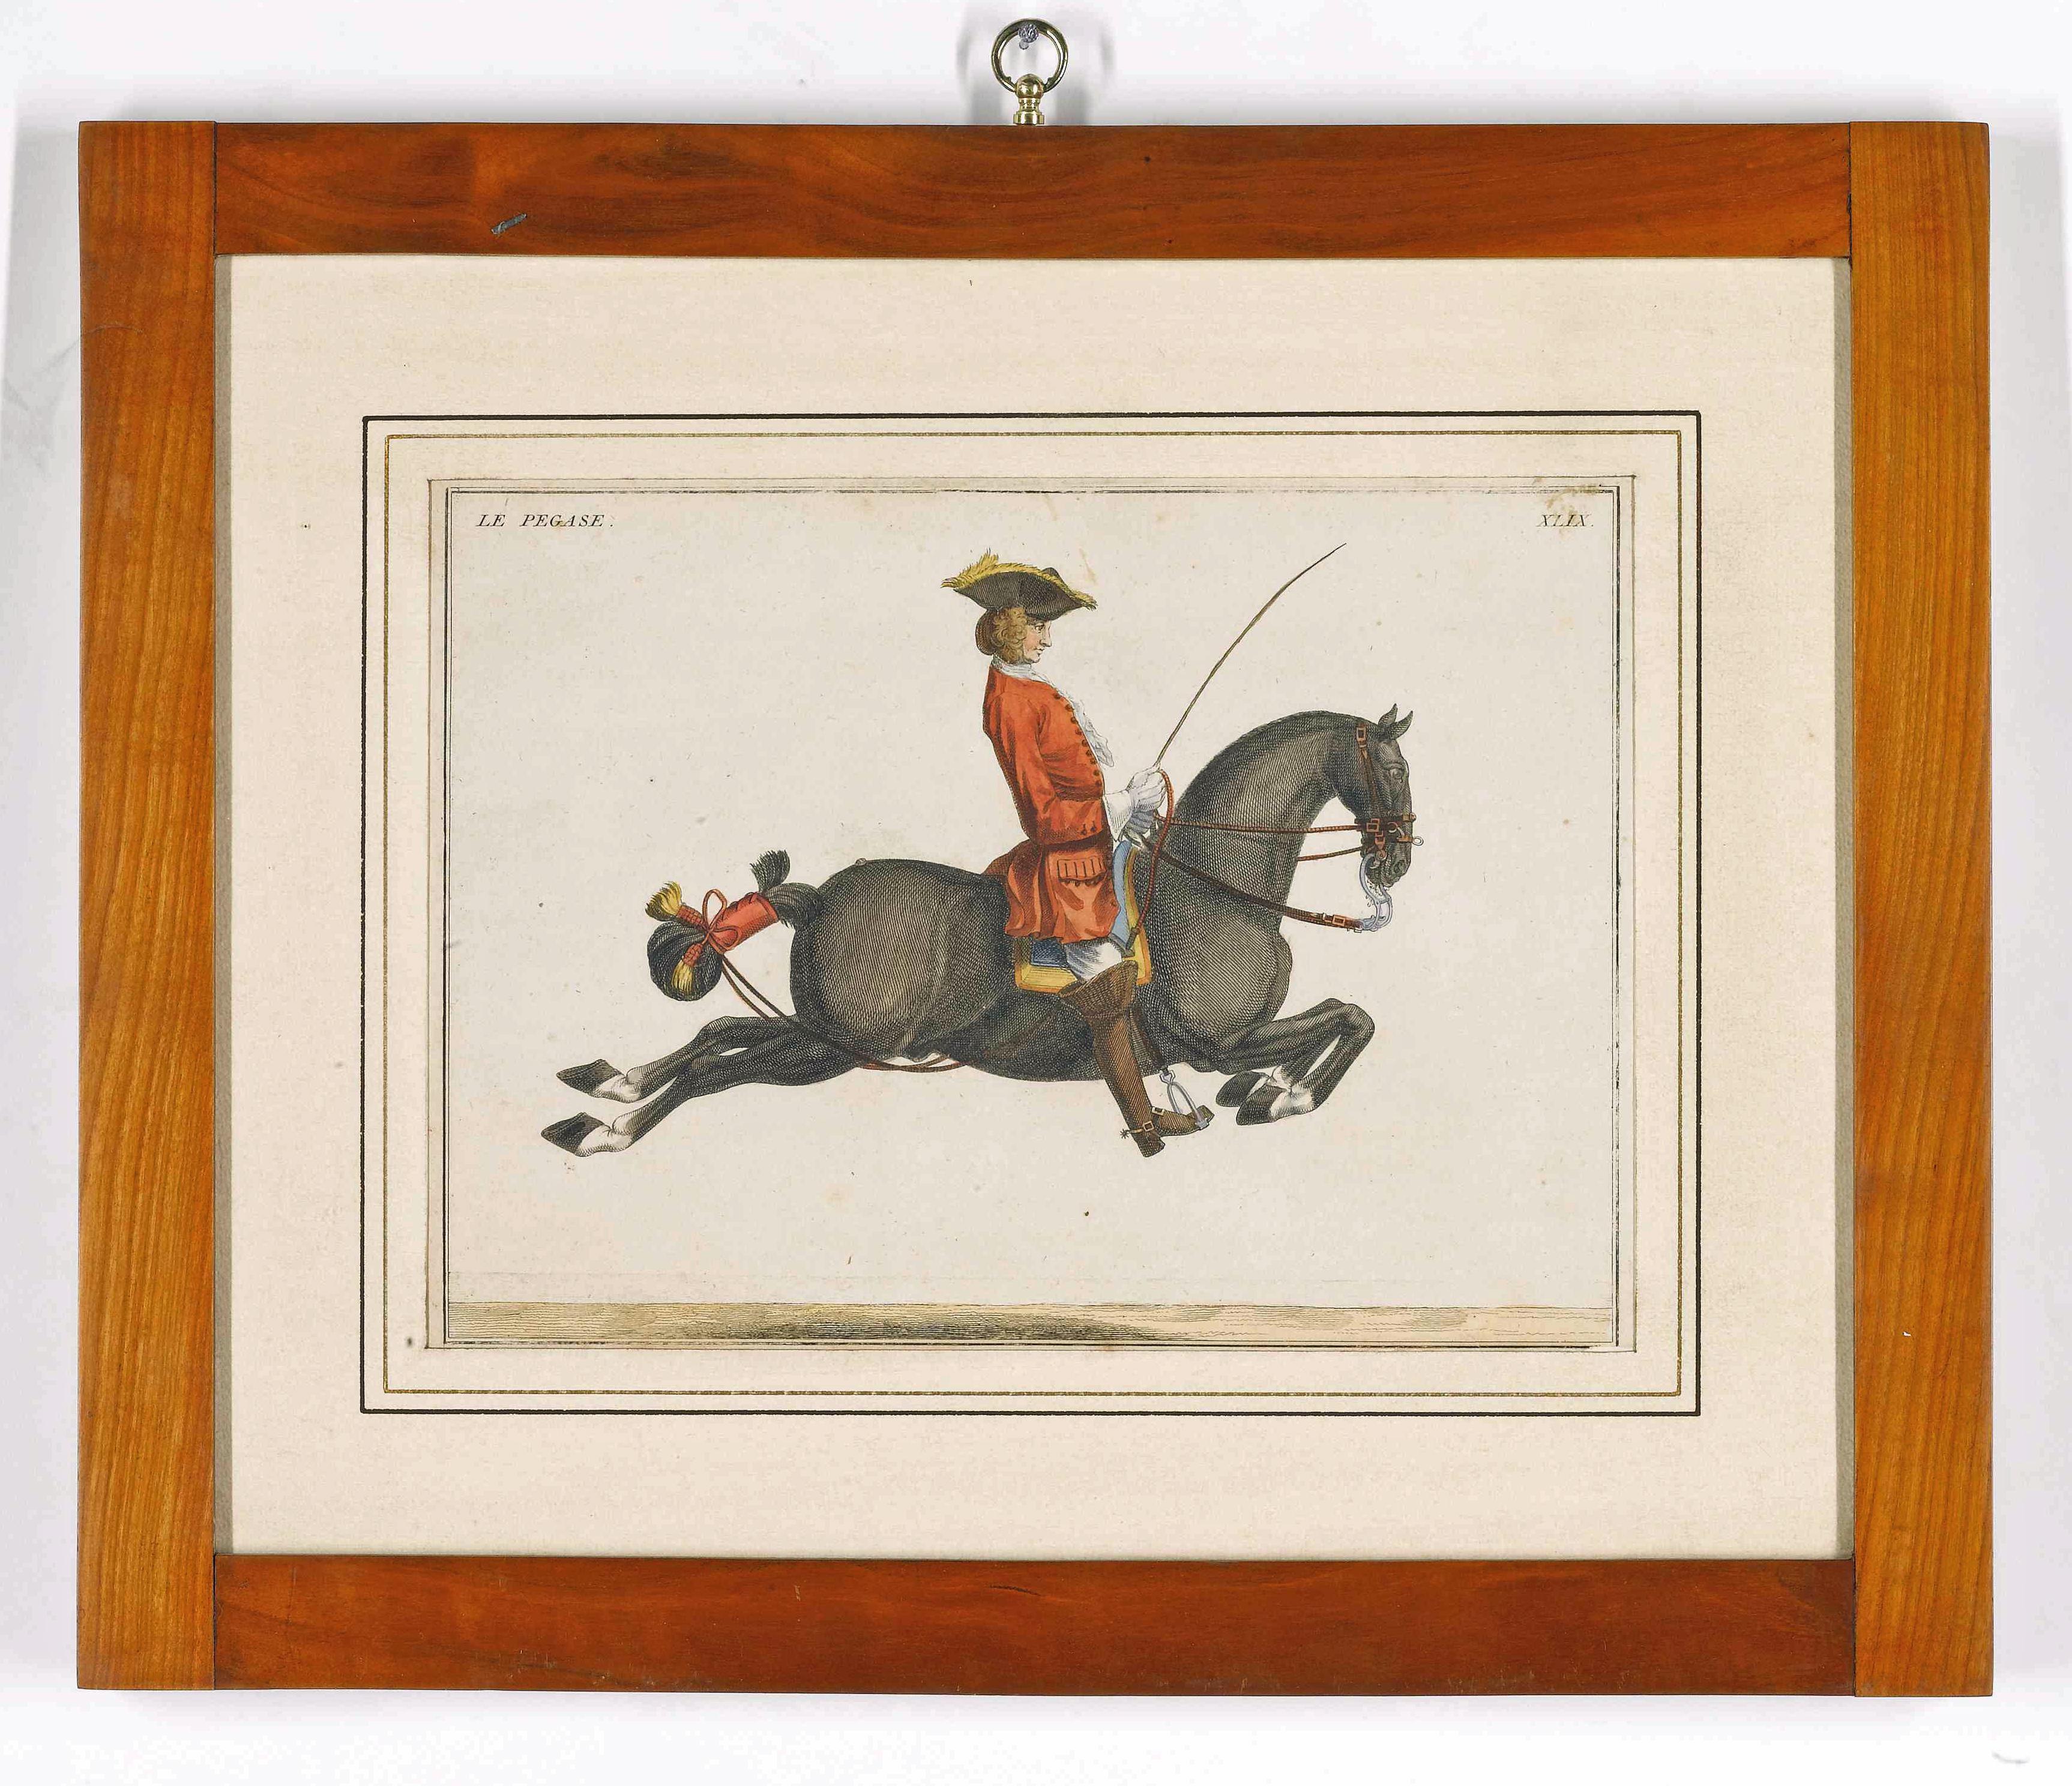  Prints of Horses, Baron D'Eisenberg, A Set of Seven. 2